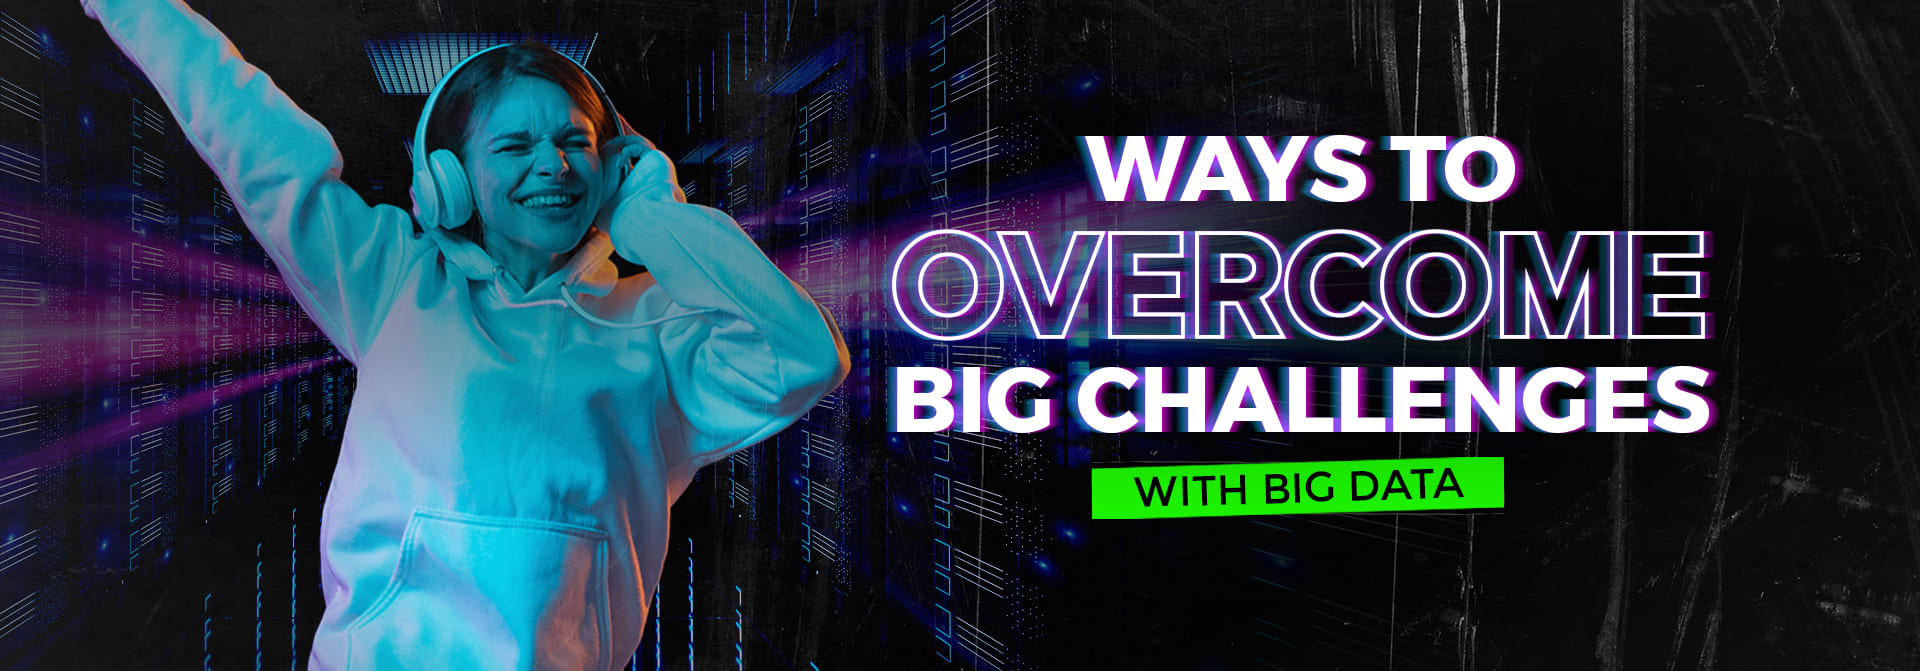 overcome Big challenges_banner